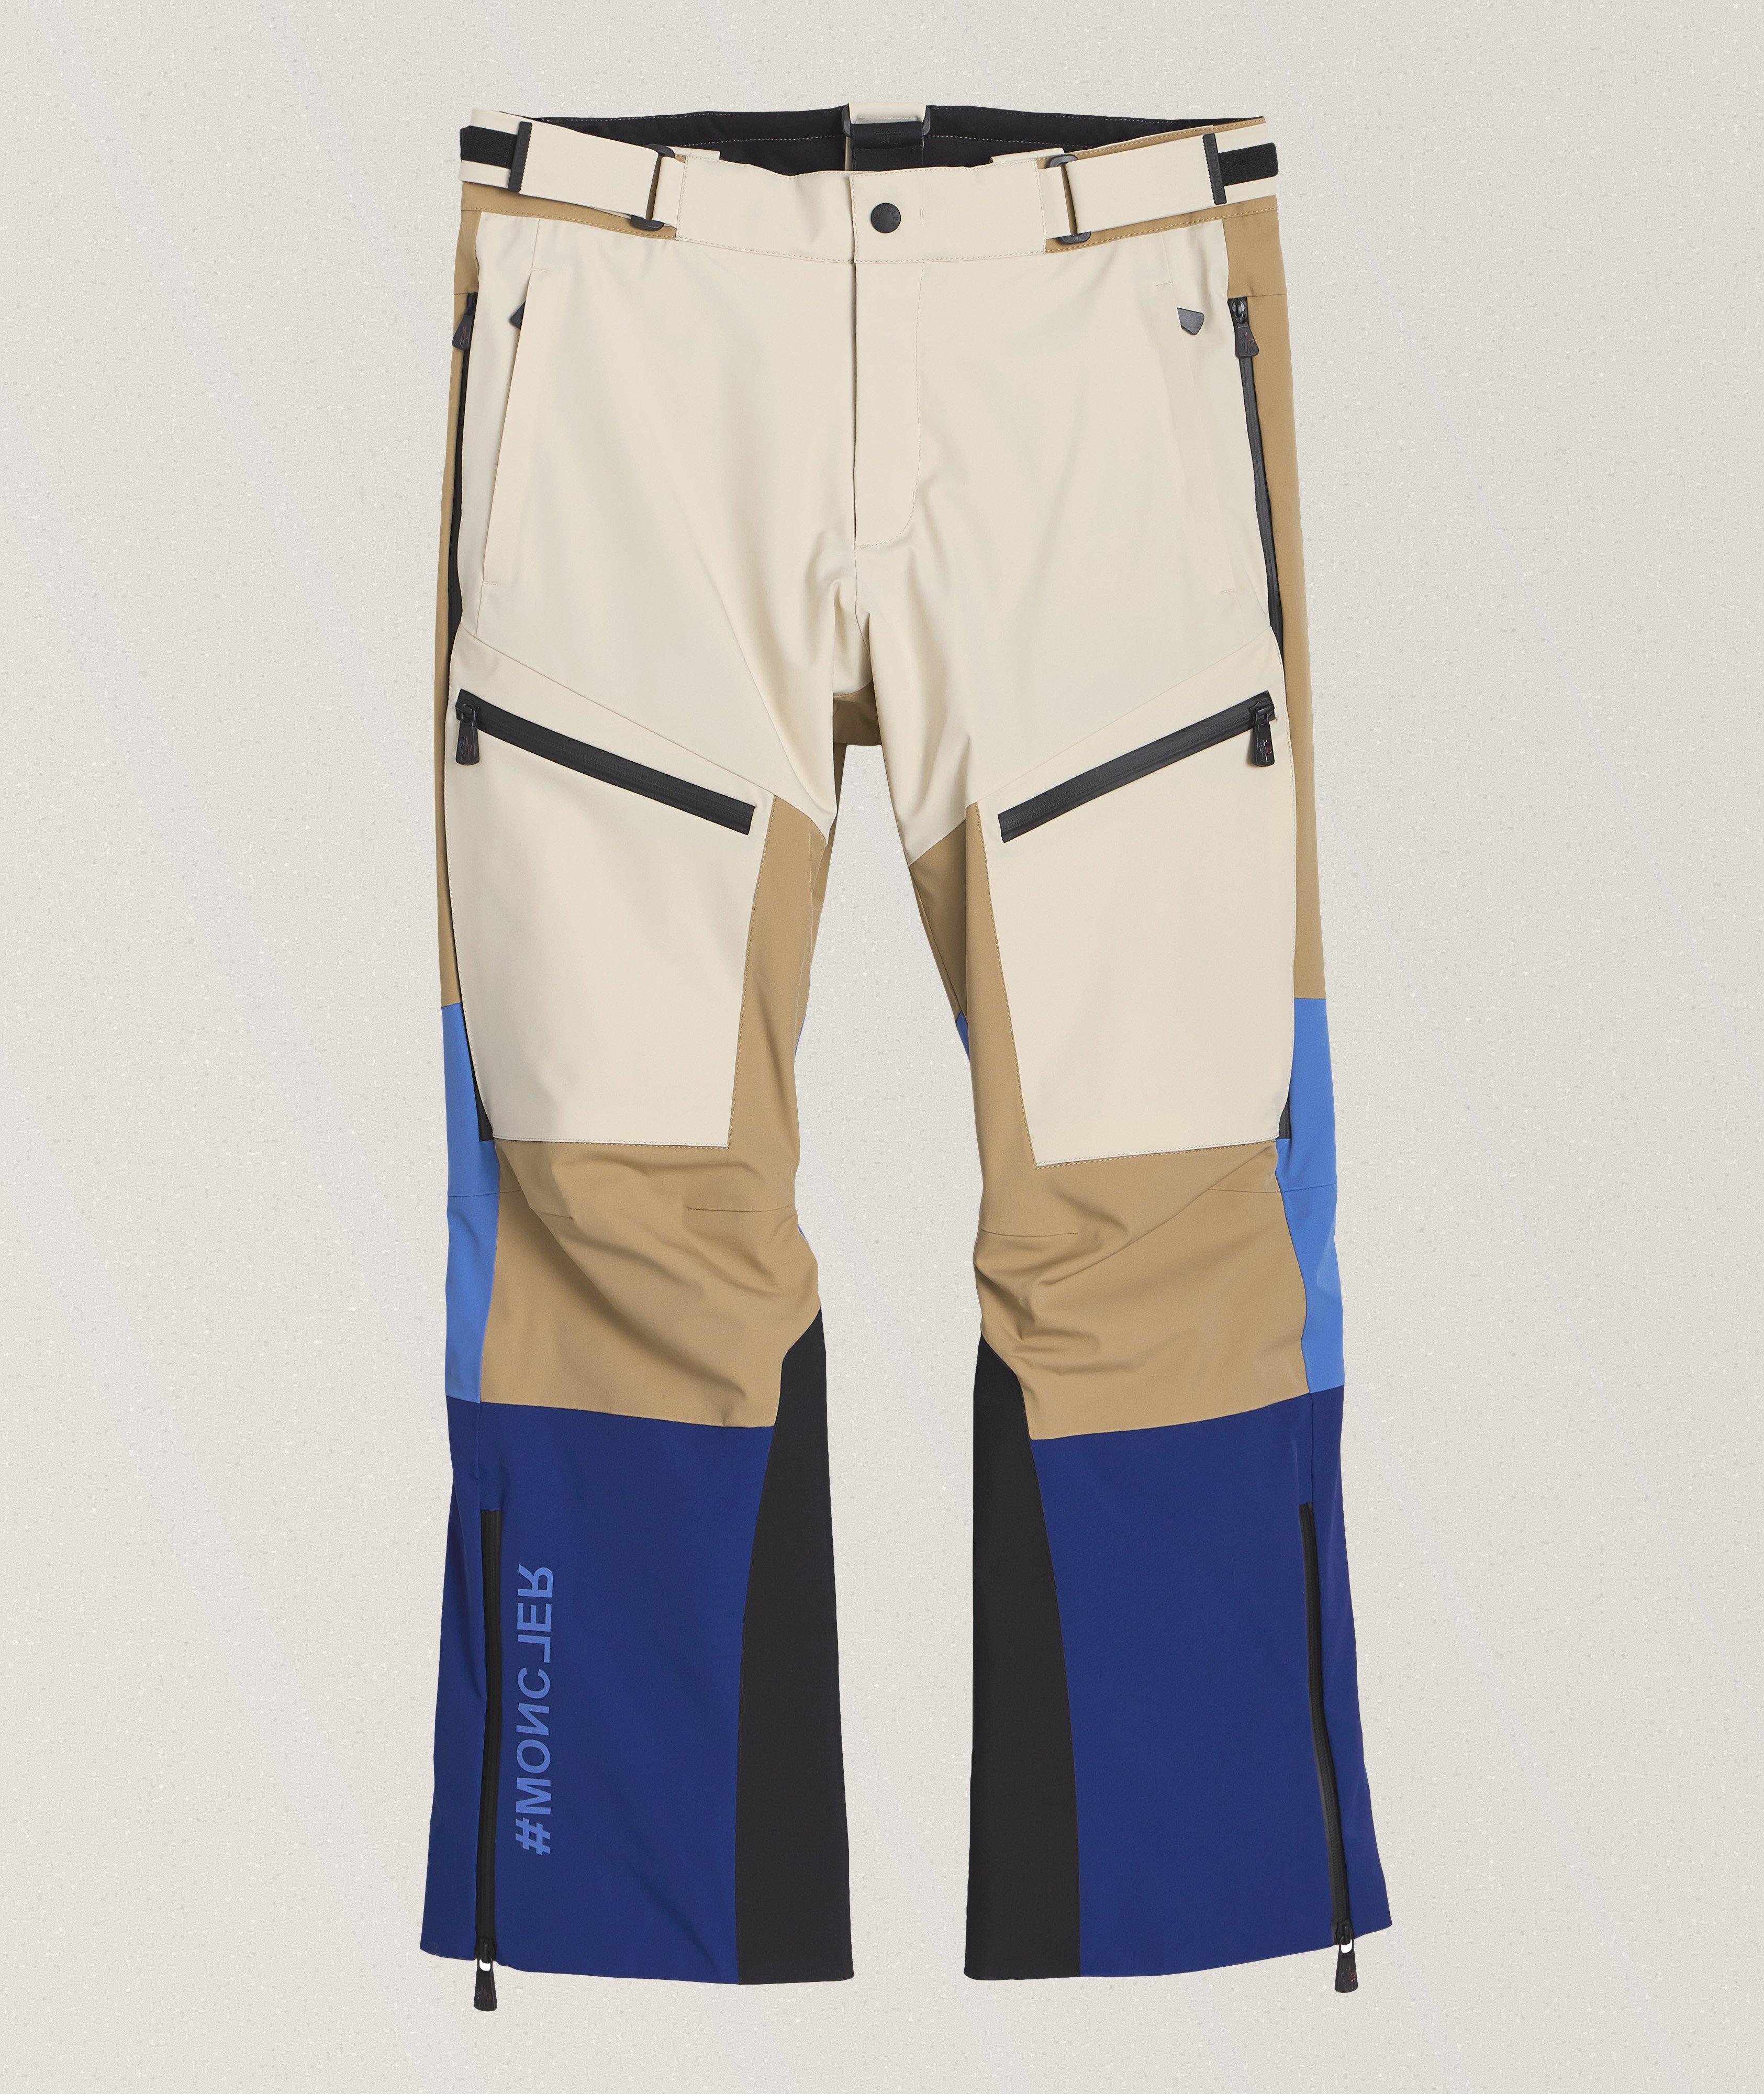 Grenoble PrimaLoft-Insulated Ski Pants image 0